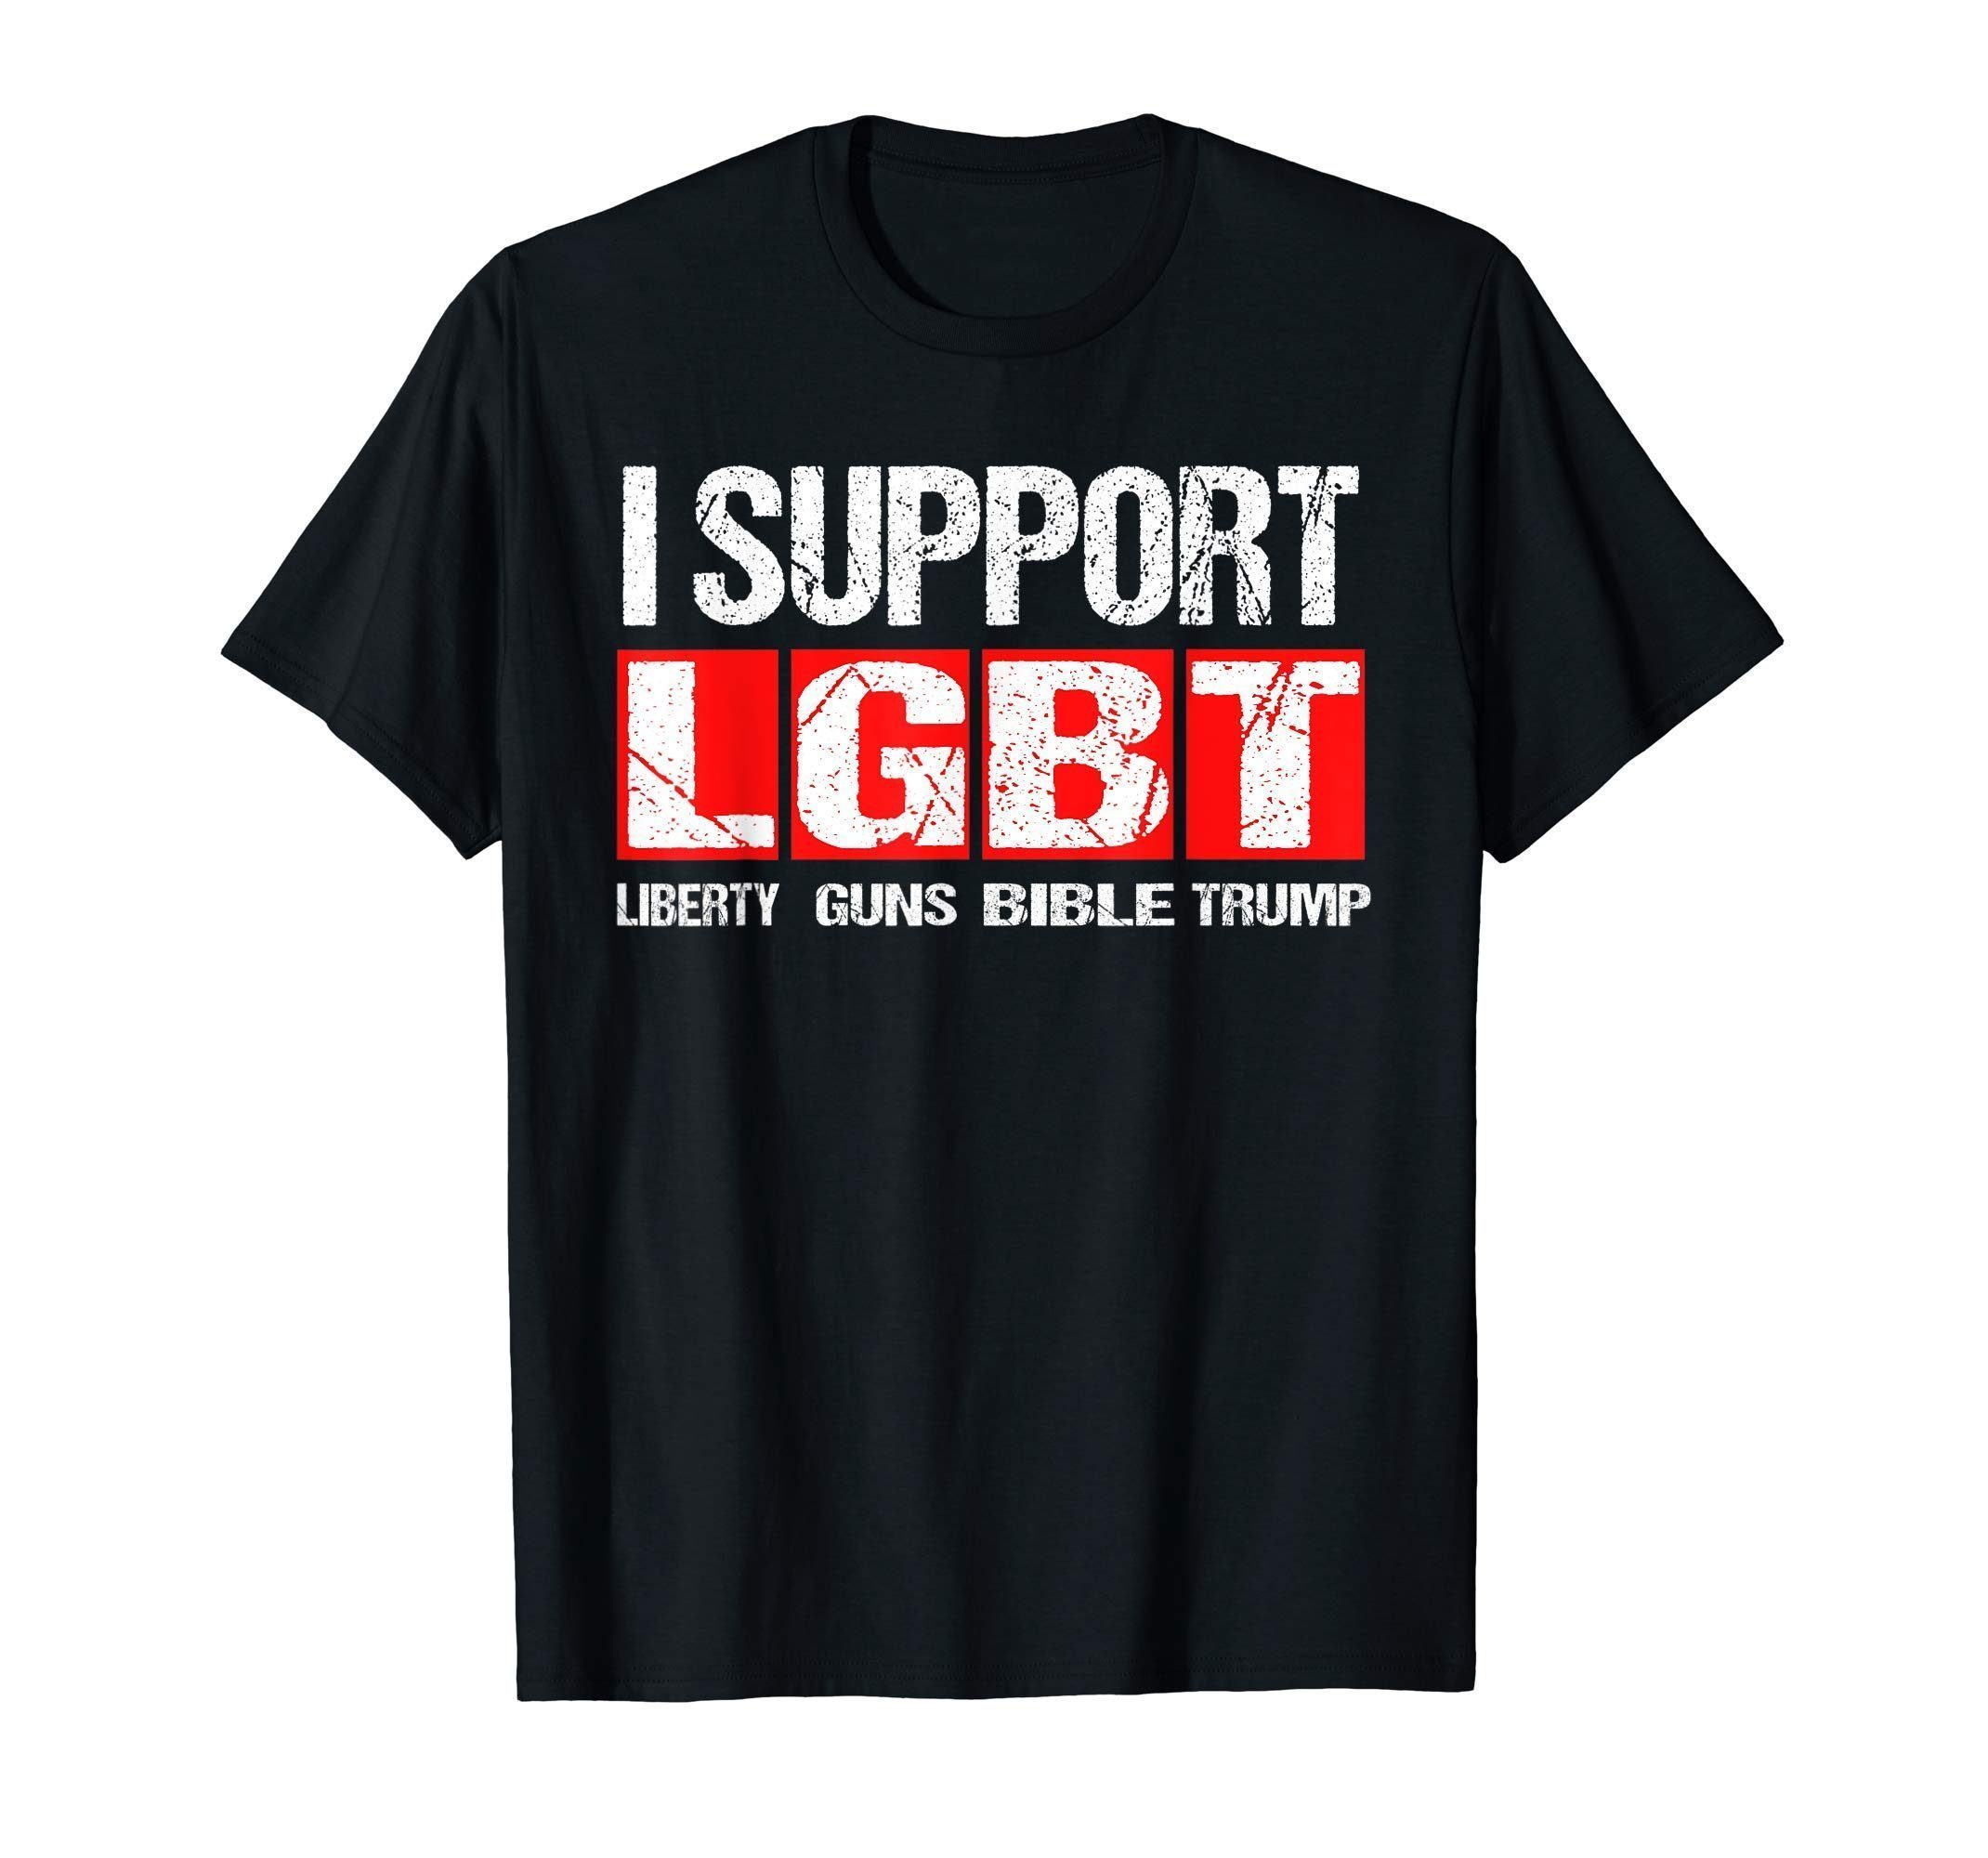 I Support LGBT Liberty Guns Bible Trump TShirts - Reviewshirts Office